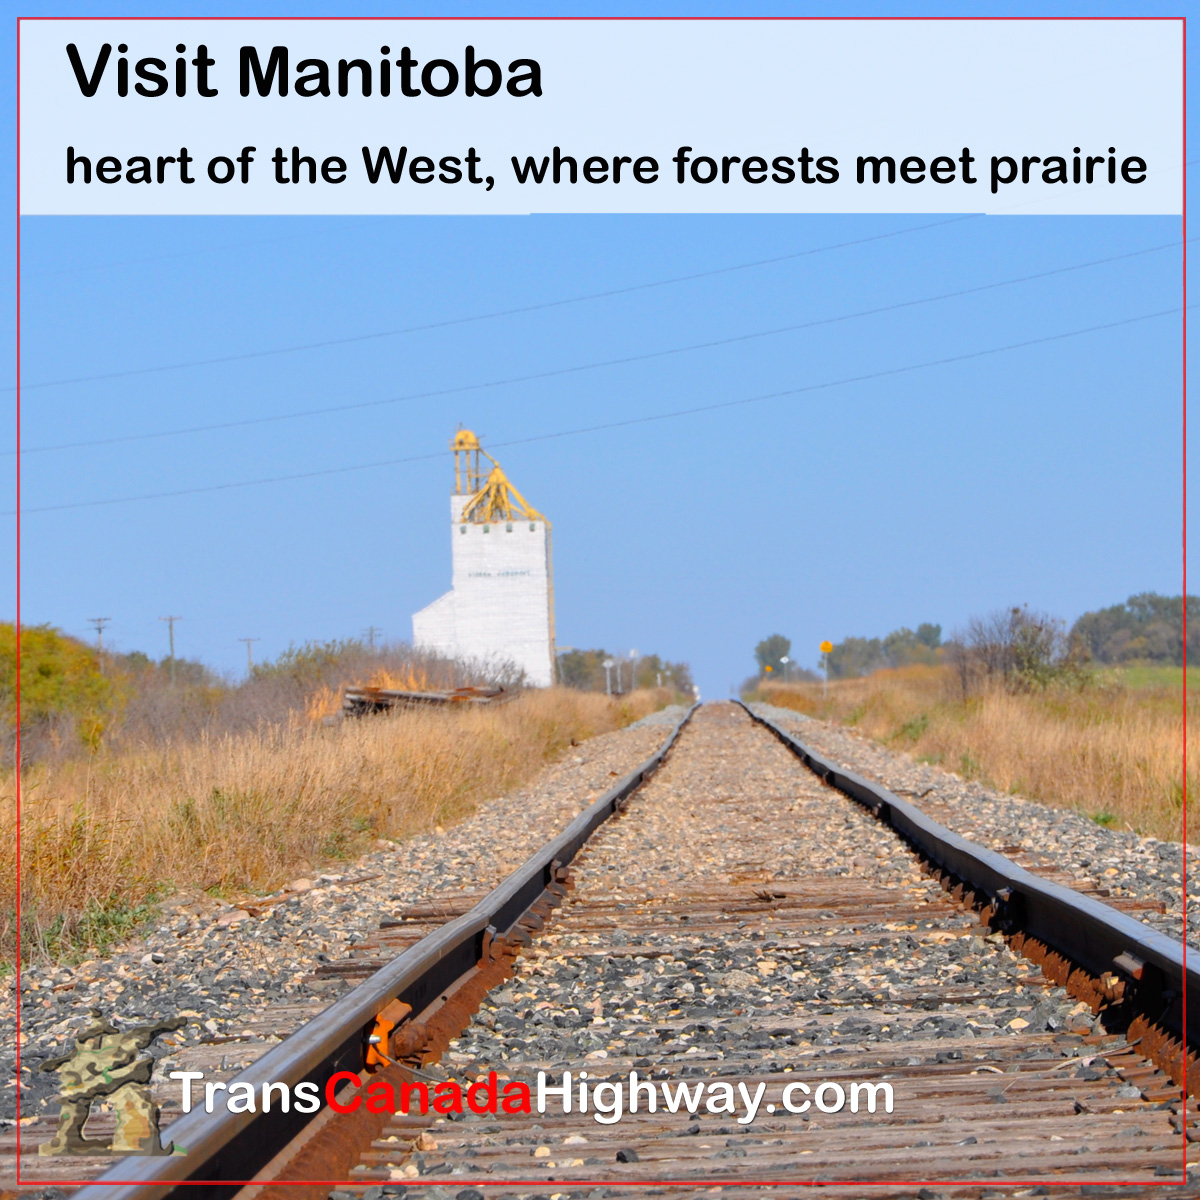 Visit Manitoba. Heart of the West, where forest meet prairie. Winnipeg, Red River, Portage La Prairie, Brandon Riding Mountain, Falcon Lake, Trans-Canada Highway
transcanadahighway.com/Manitoba/
#manitoba #winnipeg #canada #wpg #ywg #exploremb #winnipeglocal #winnipeglife #yourmanitoba